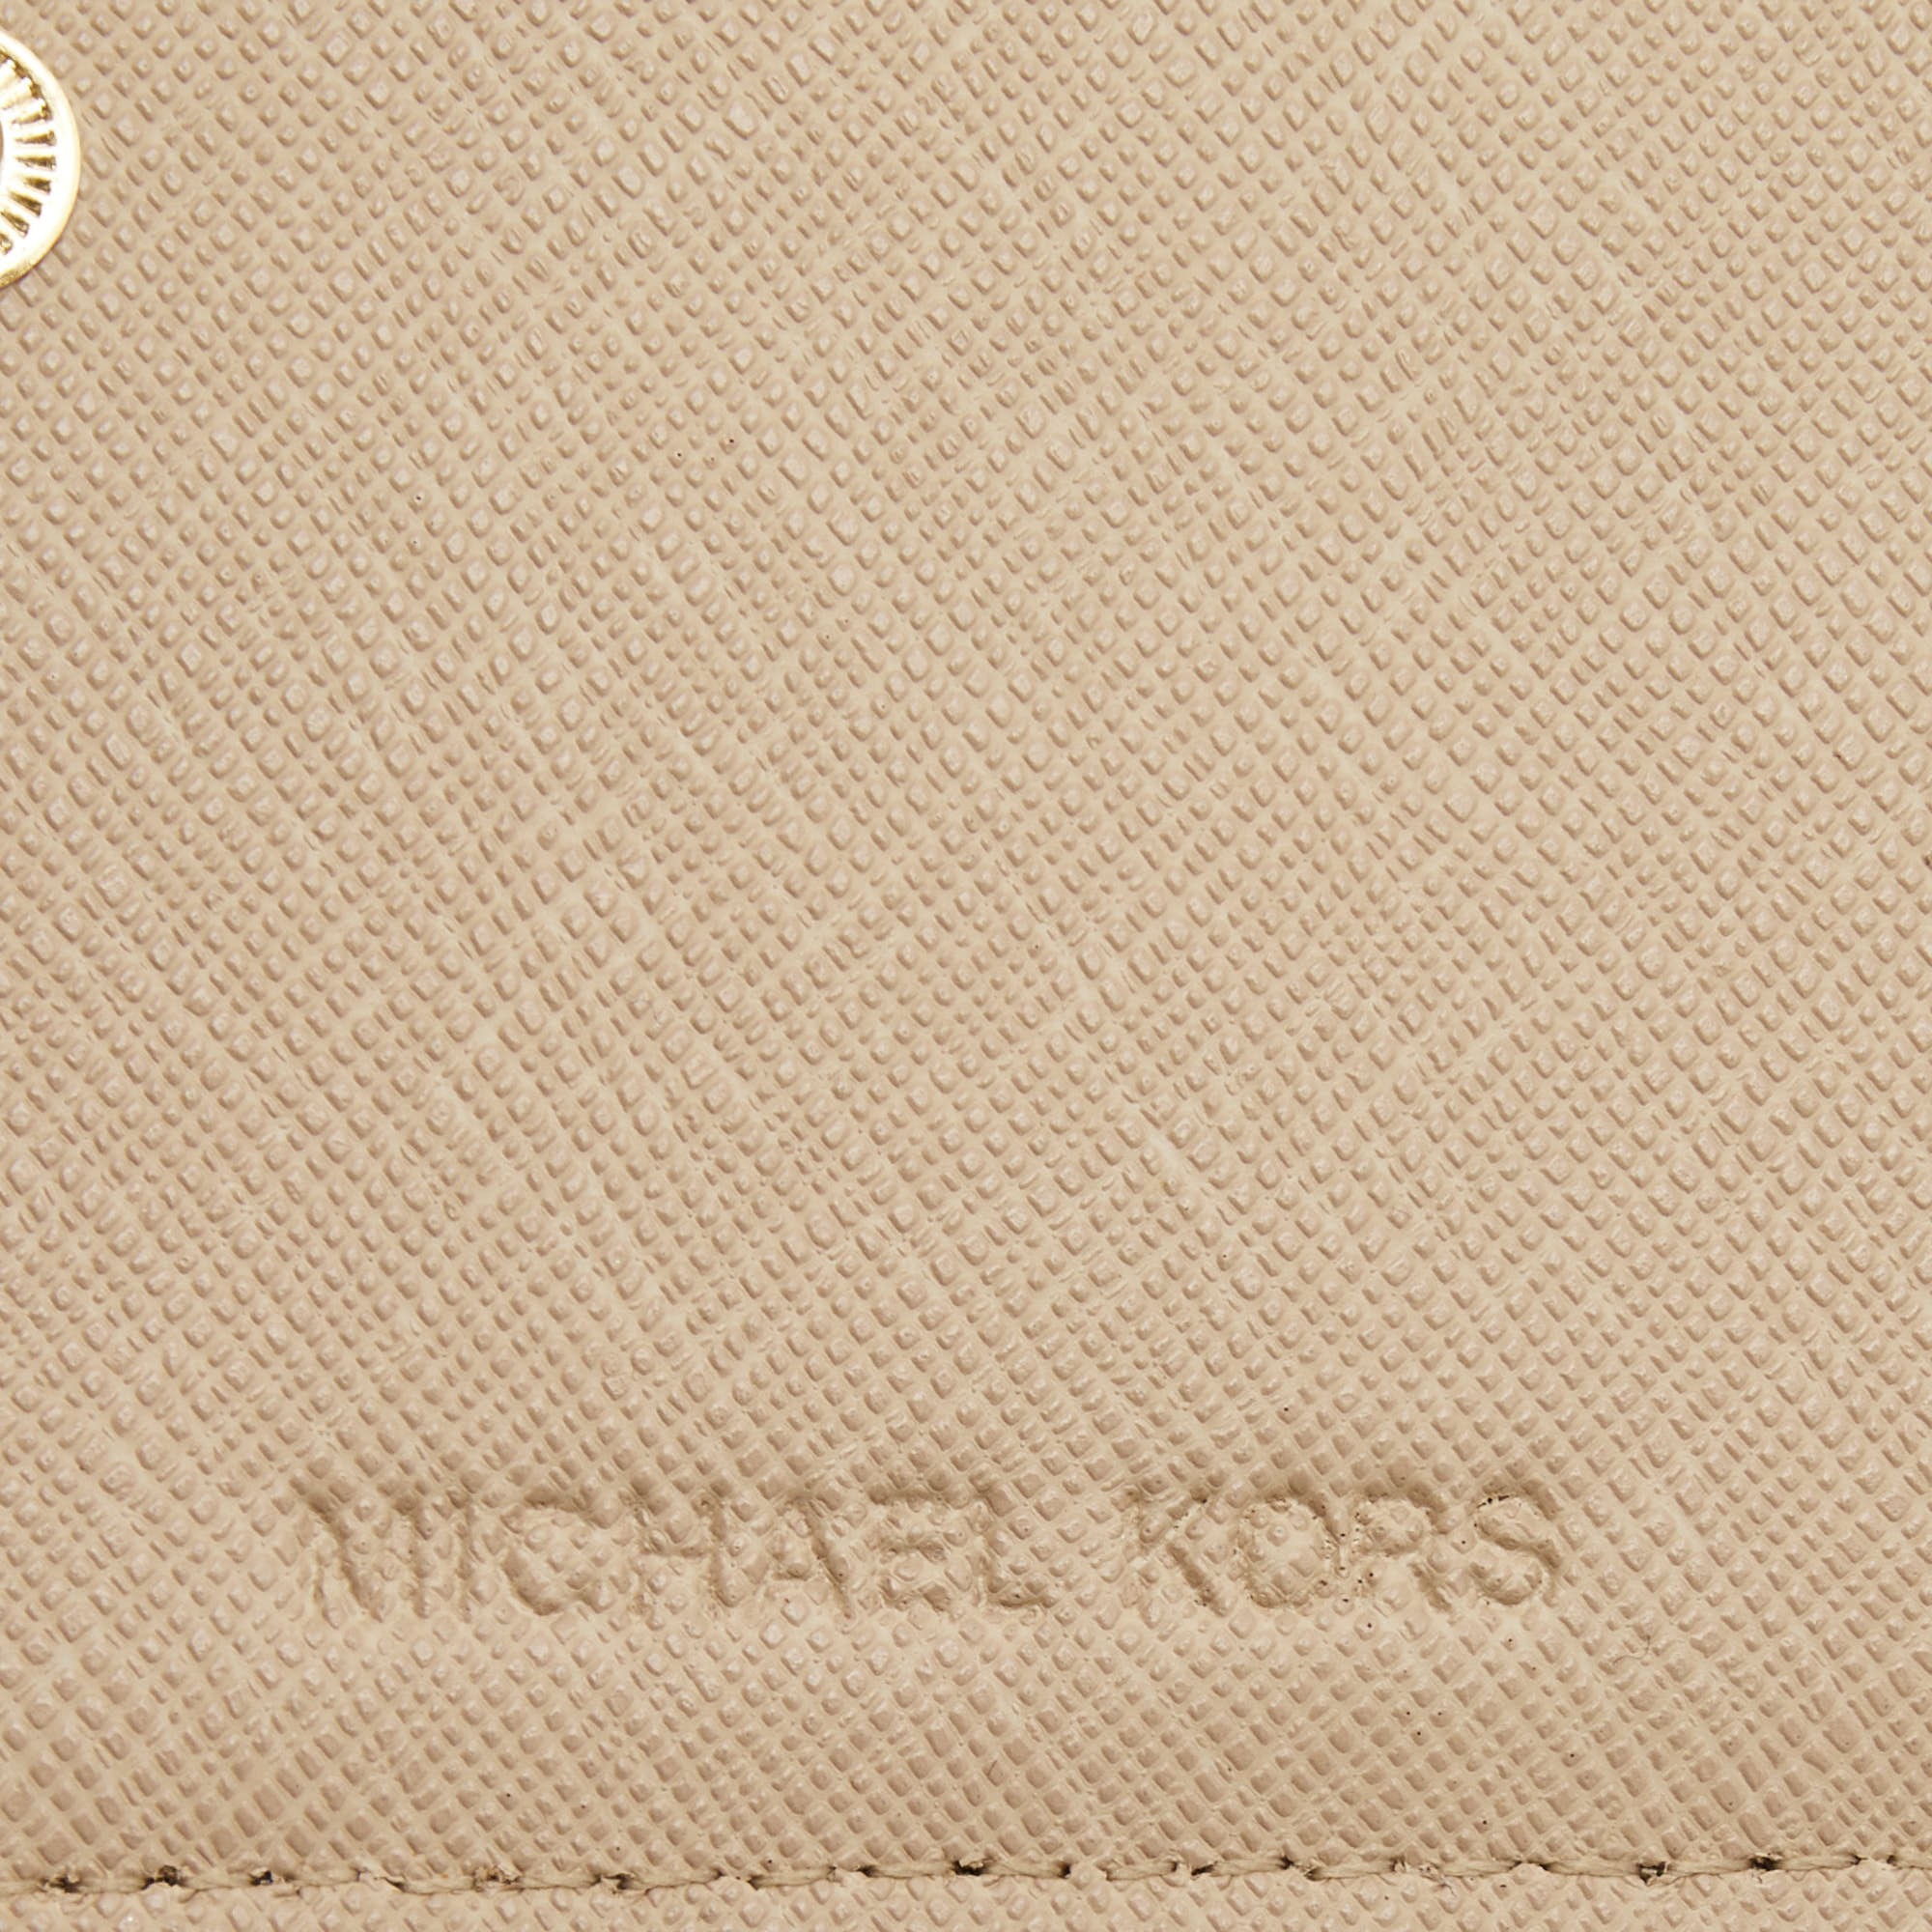 Michael Kors Beige Leather Bifold Card Holder